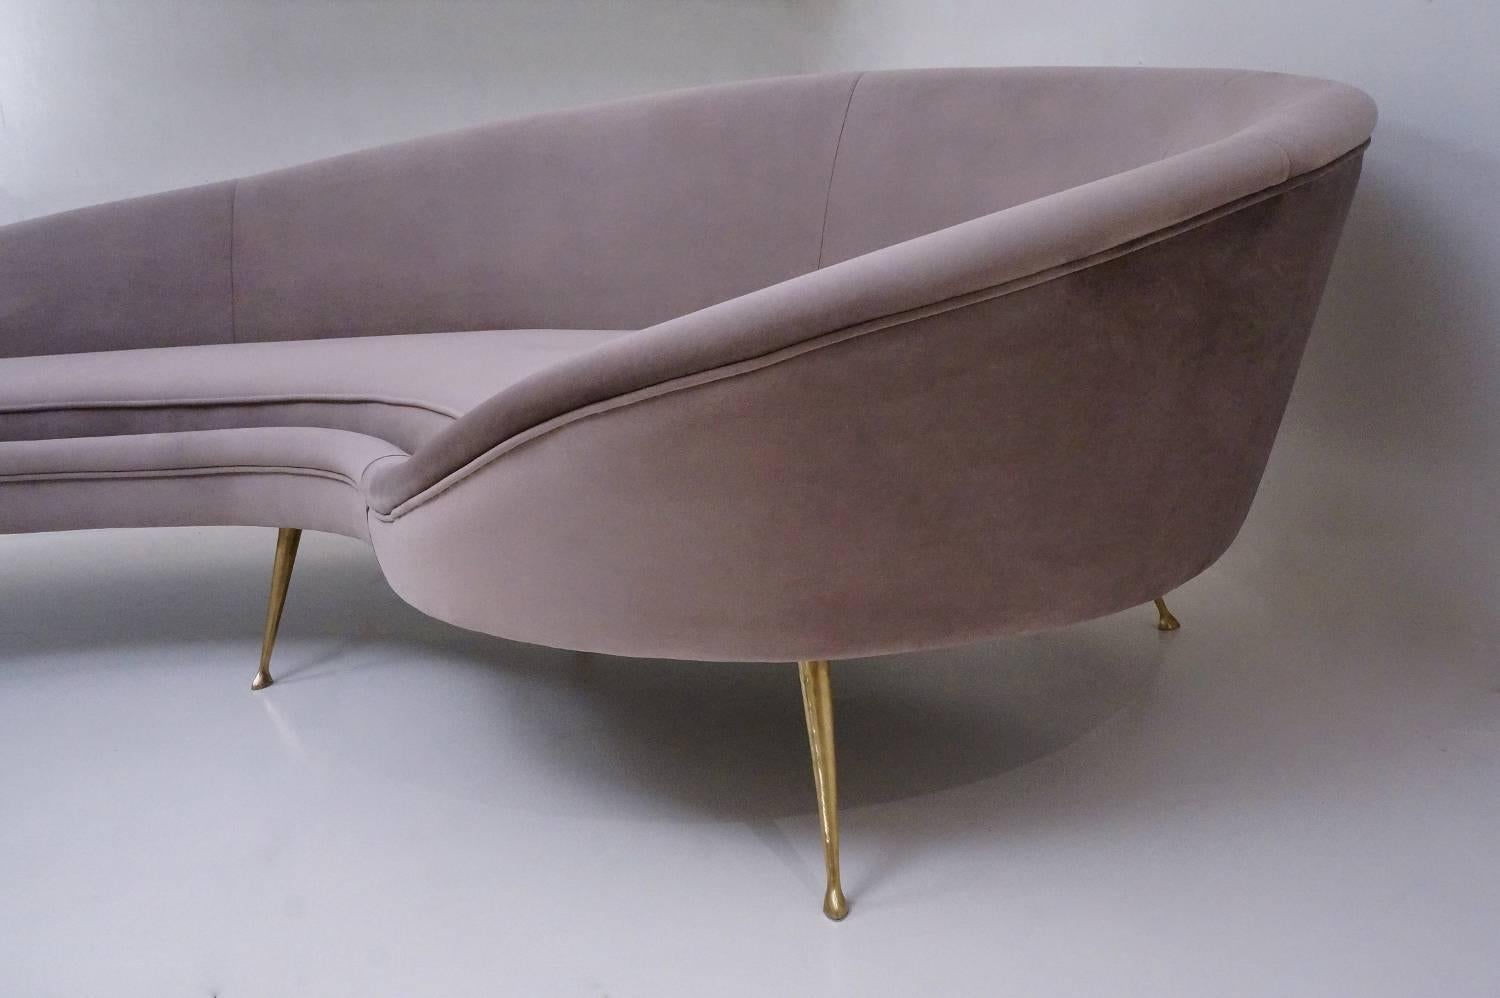 Contemporary Ico Parisi Sofa 1950s Style in New Velvet Upholstery, Italian